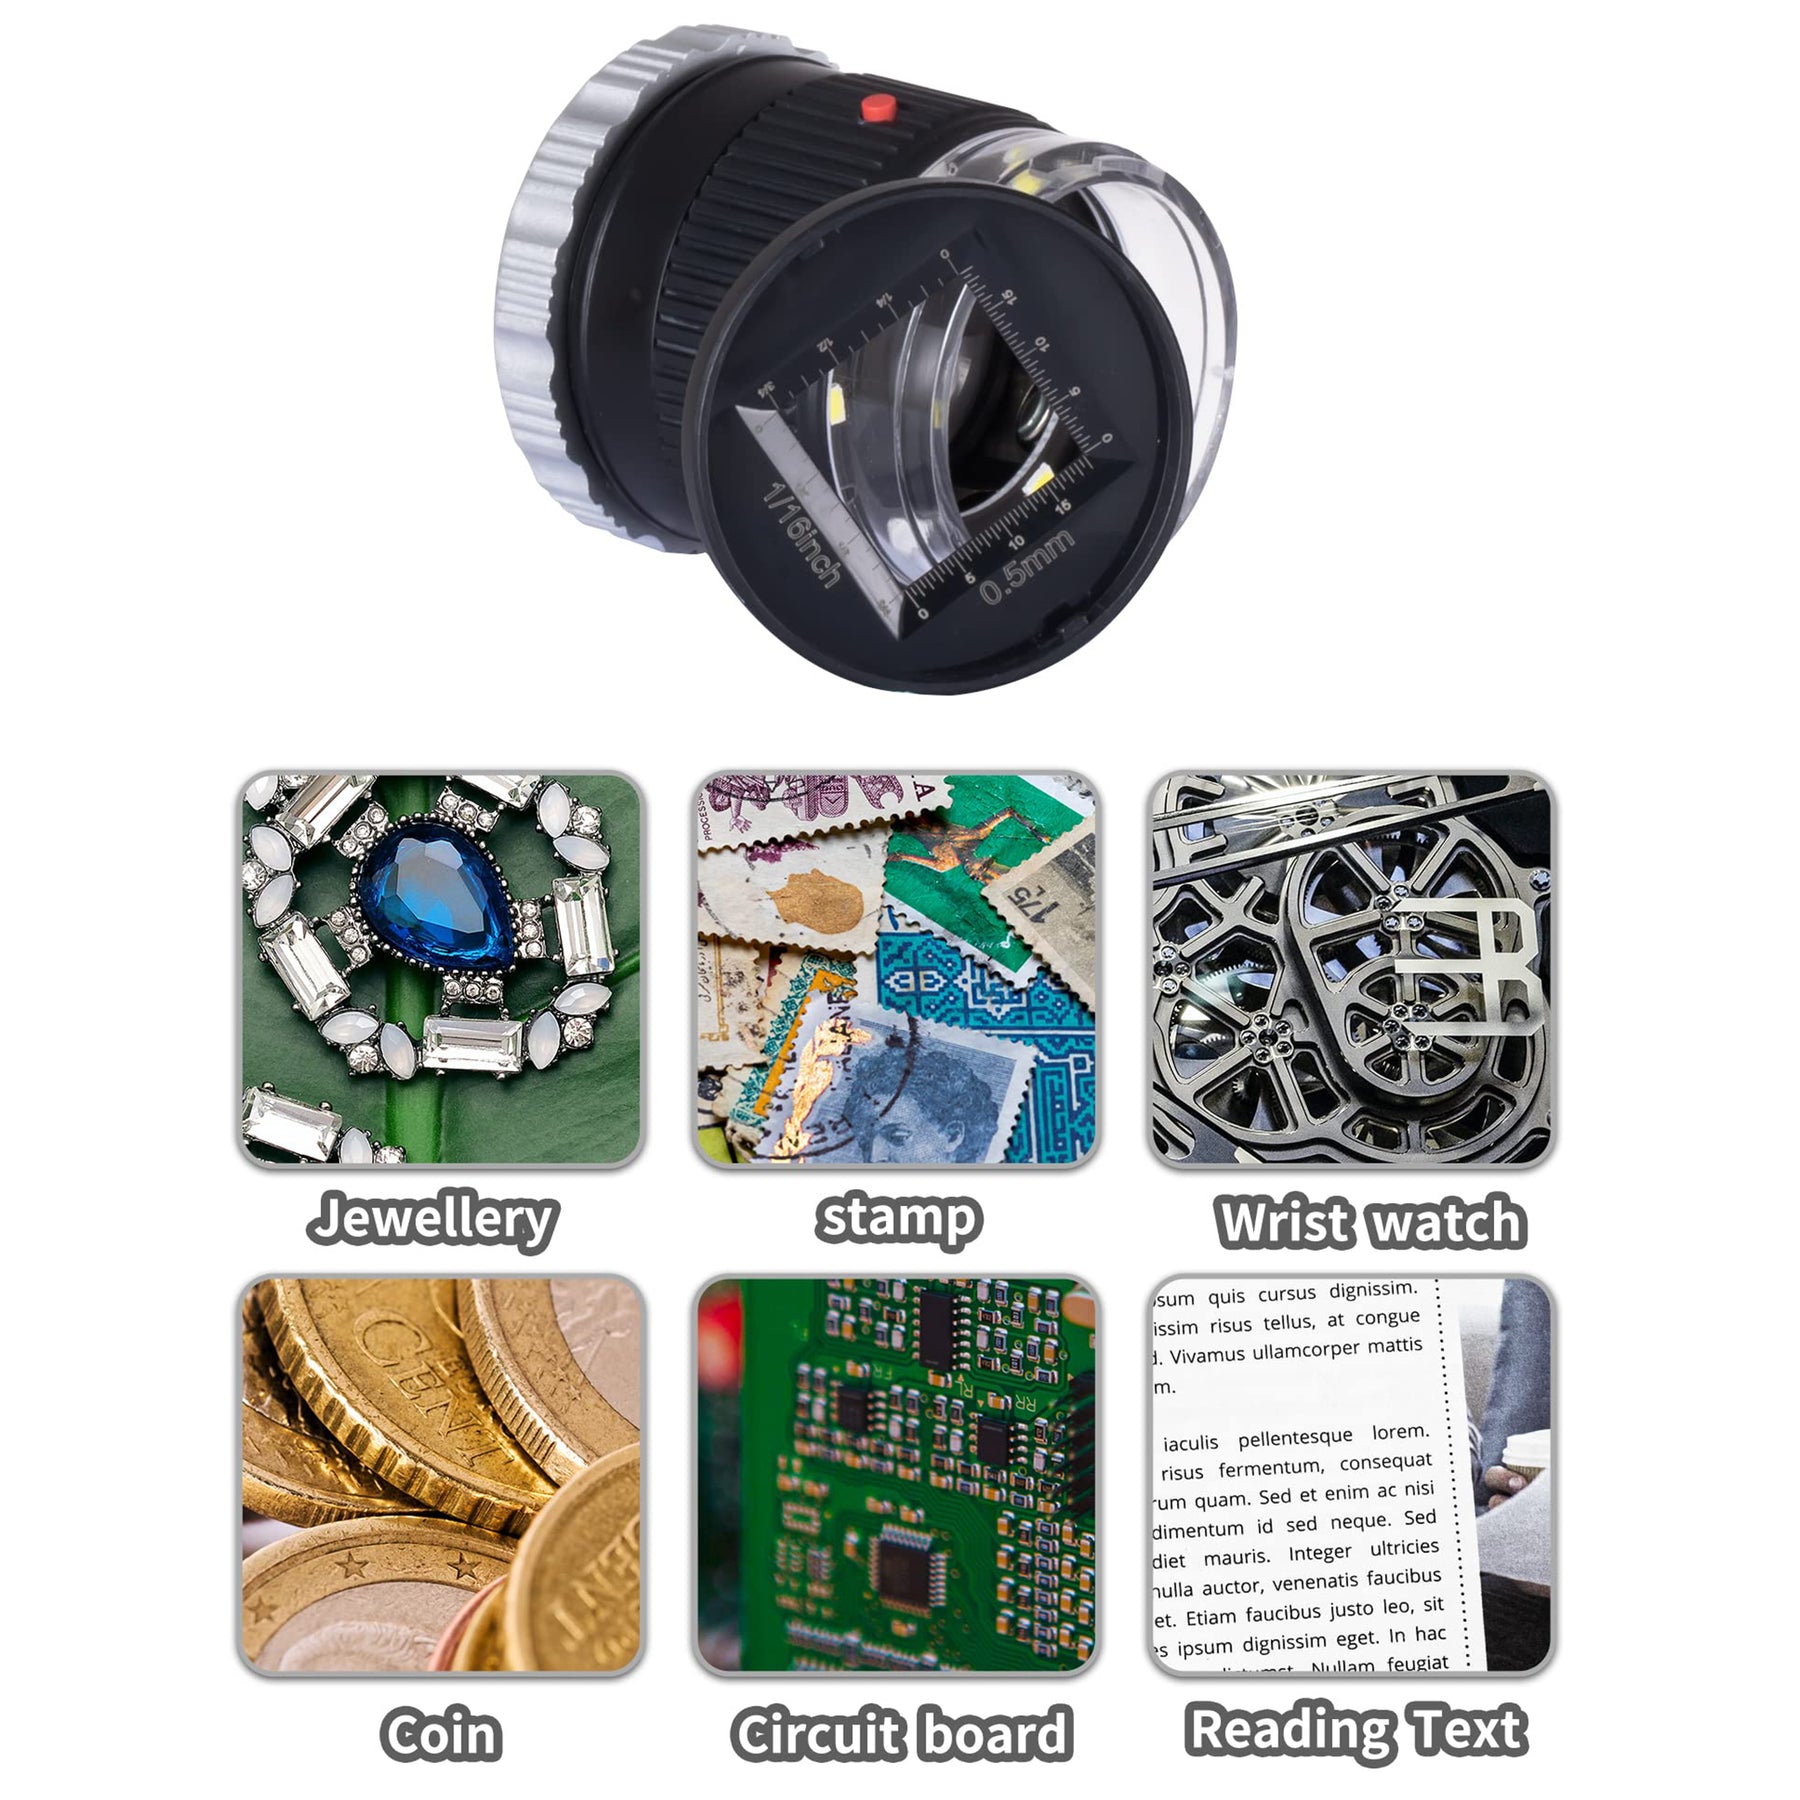 JARLINK 30X Jewelers Loupe, Adjustable Focal Length Magnifier with 3 LED Light for Gems